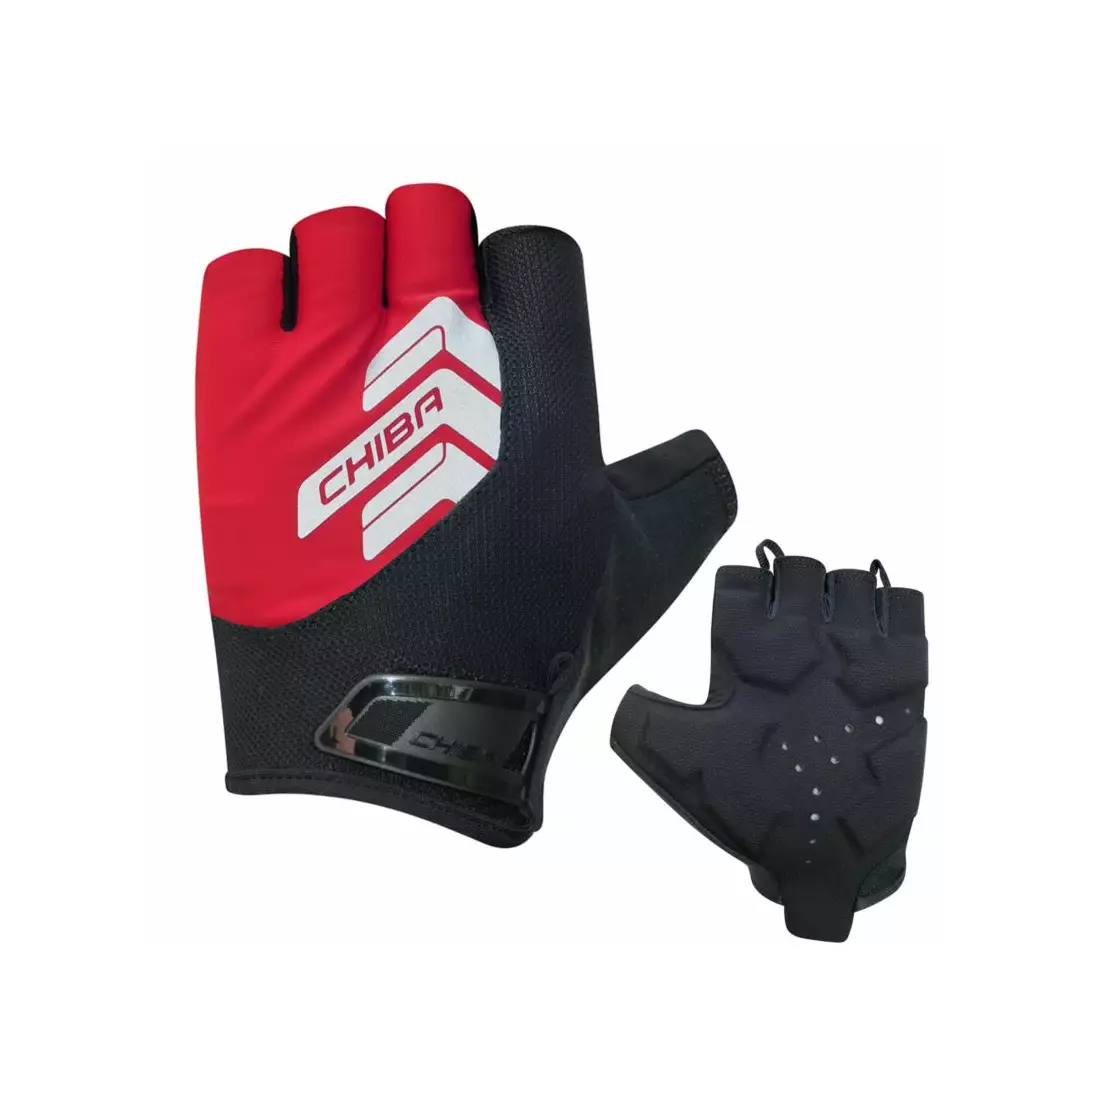 CHIBA REFLEX II mănuși de ciclism, negre-roșu